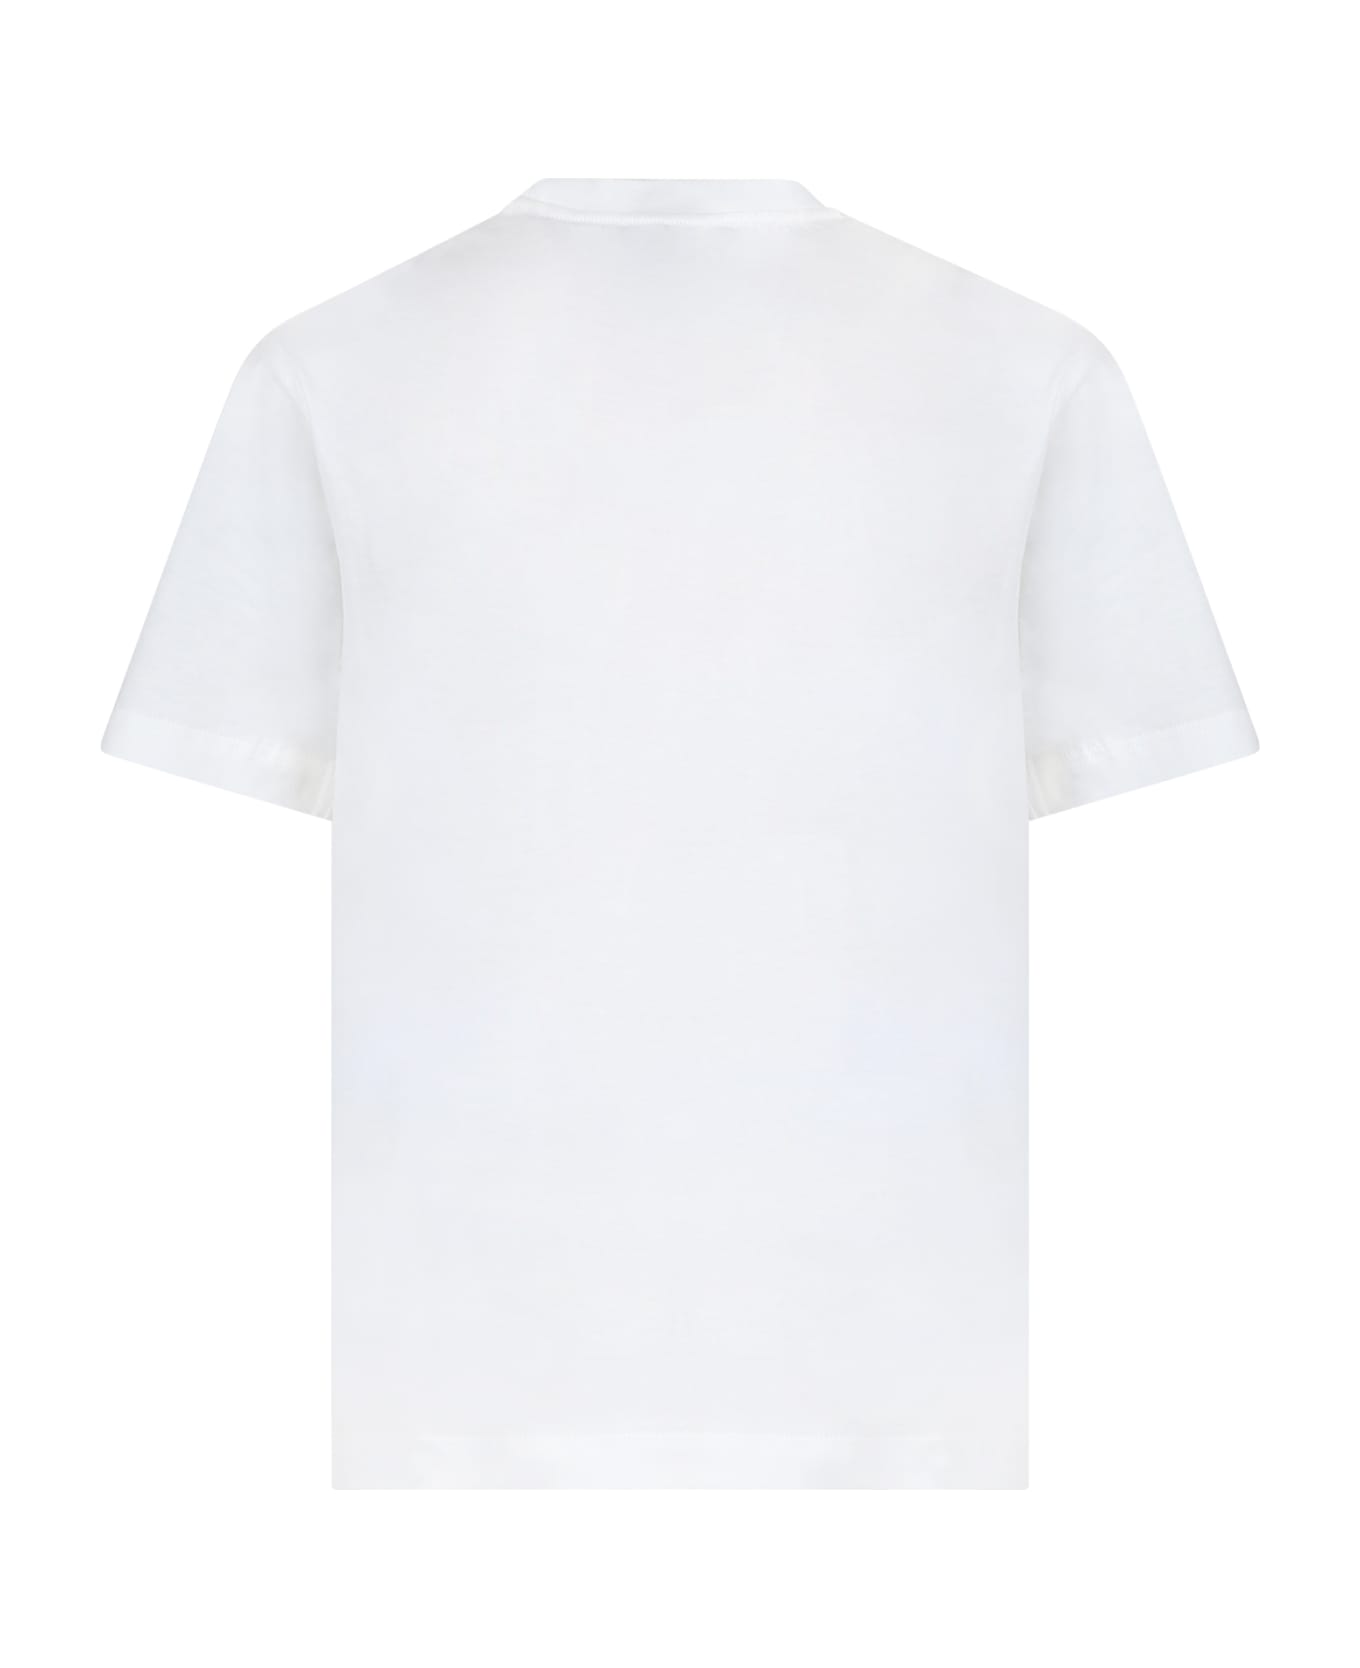 Armani Collezioni White T-shirt For Boy With Eagle - White